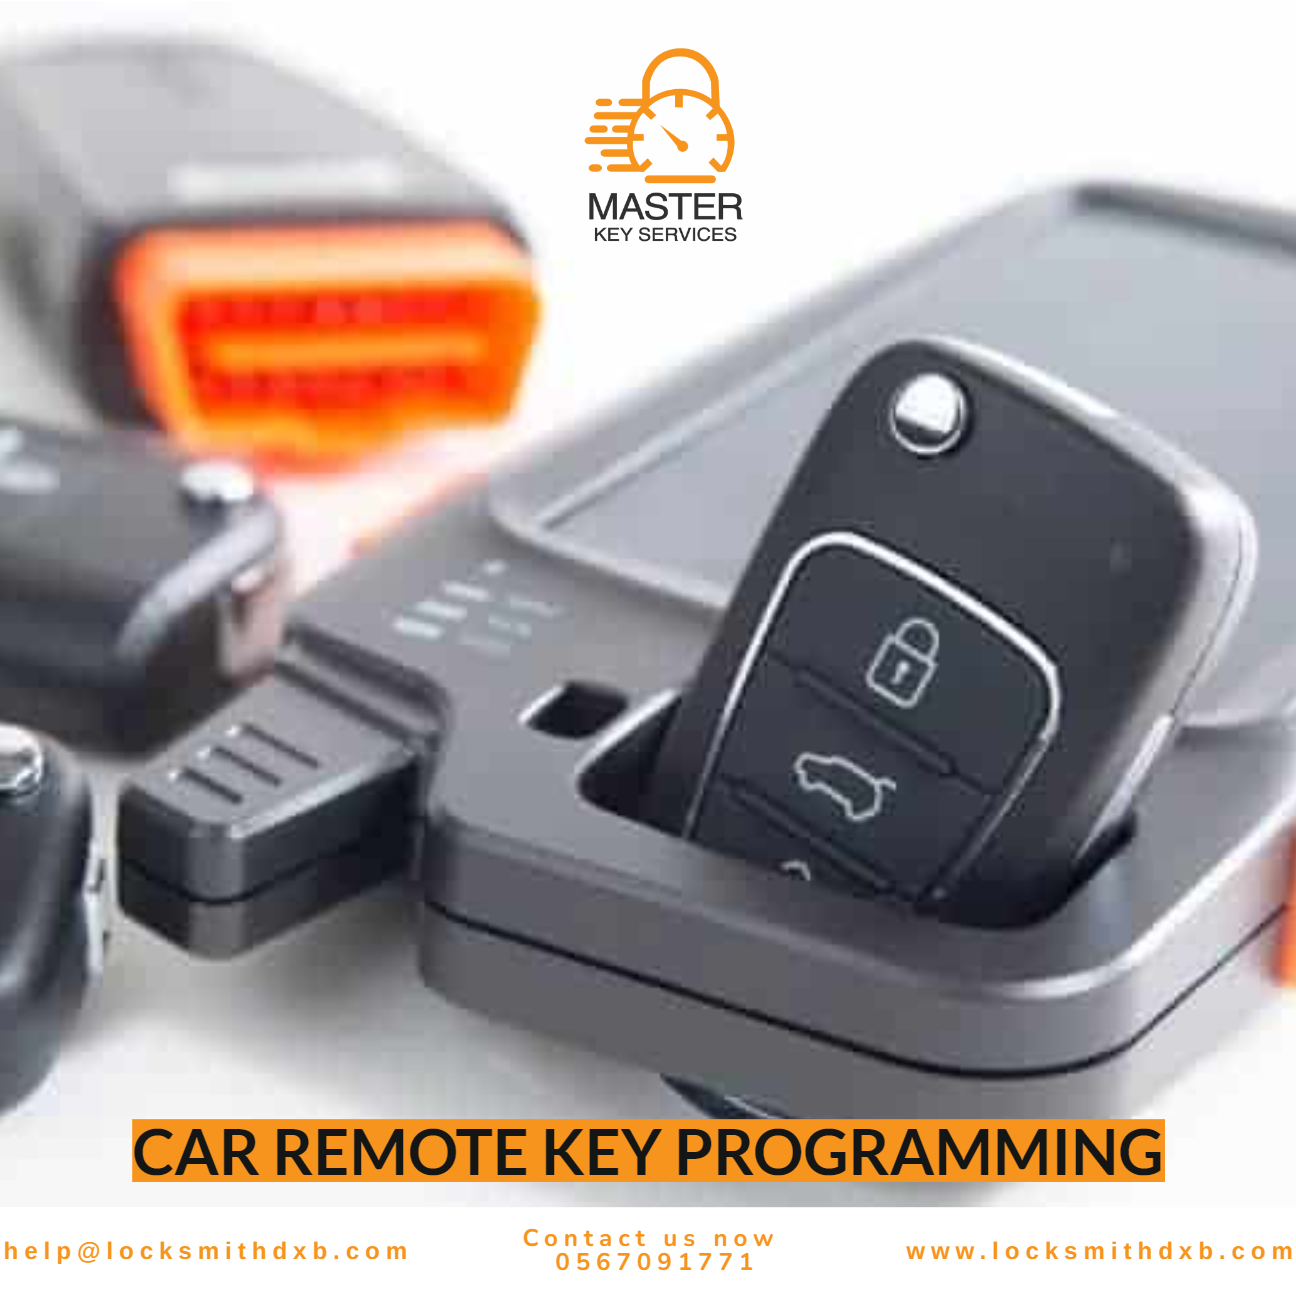 Car remote key programming